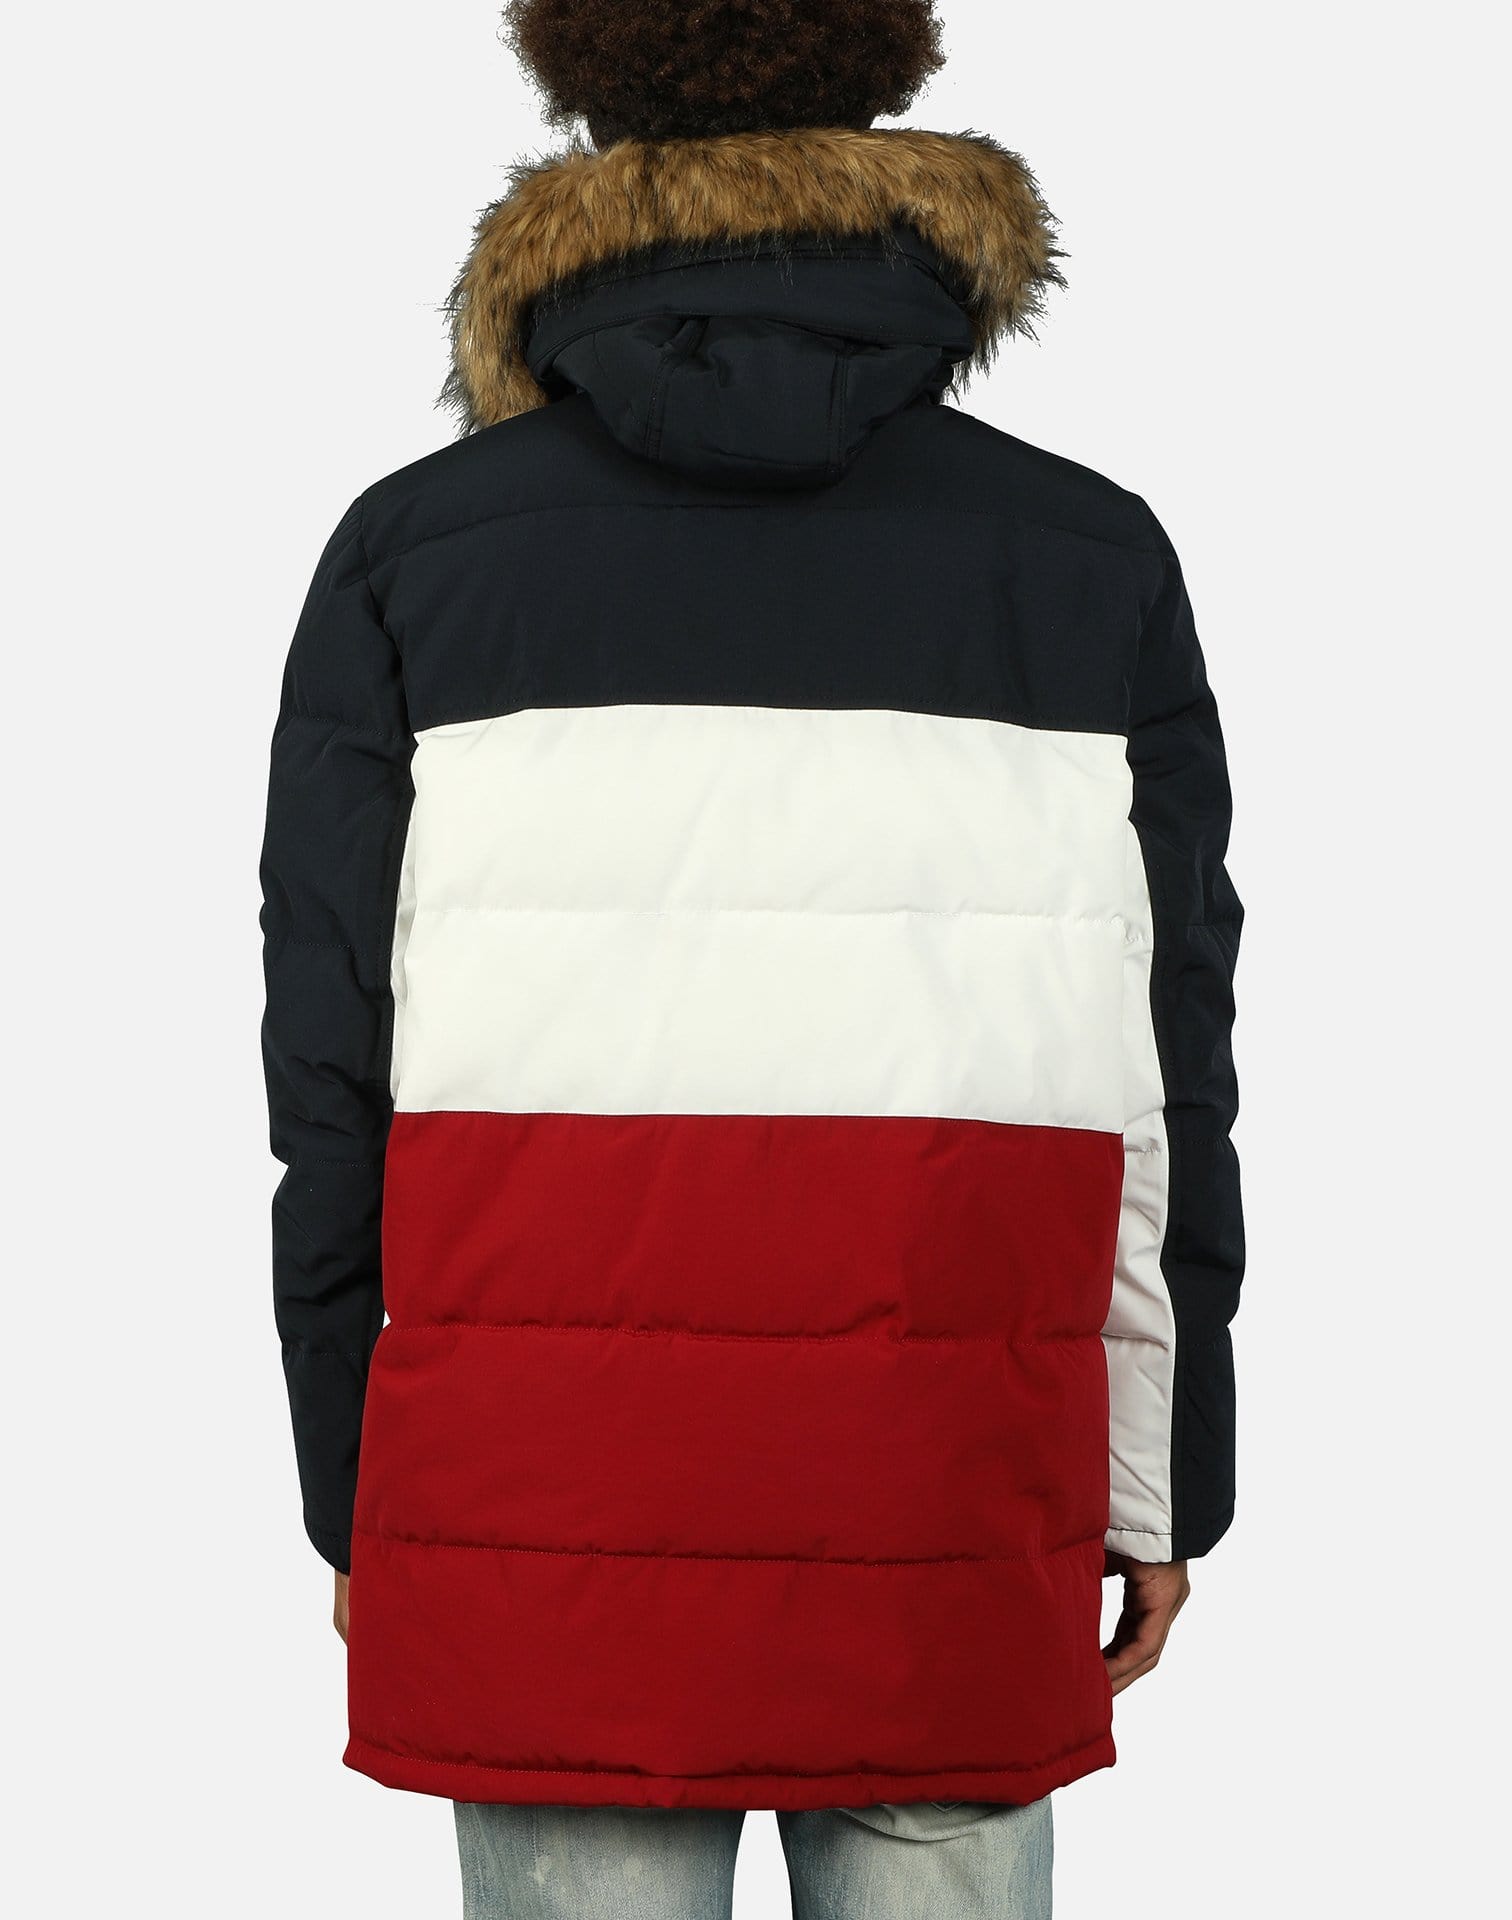 Tommy Hilfiger Men's Arctic Cloth Full Length Jacket